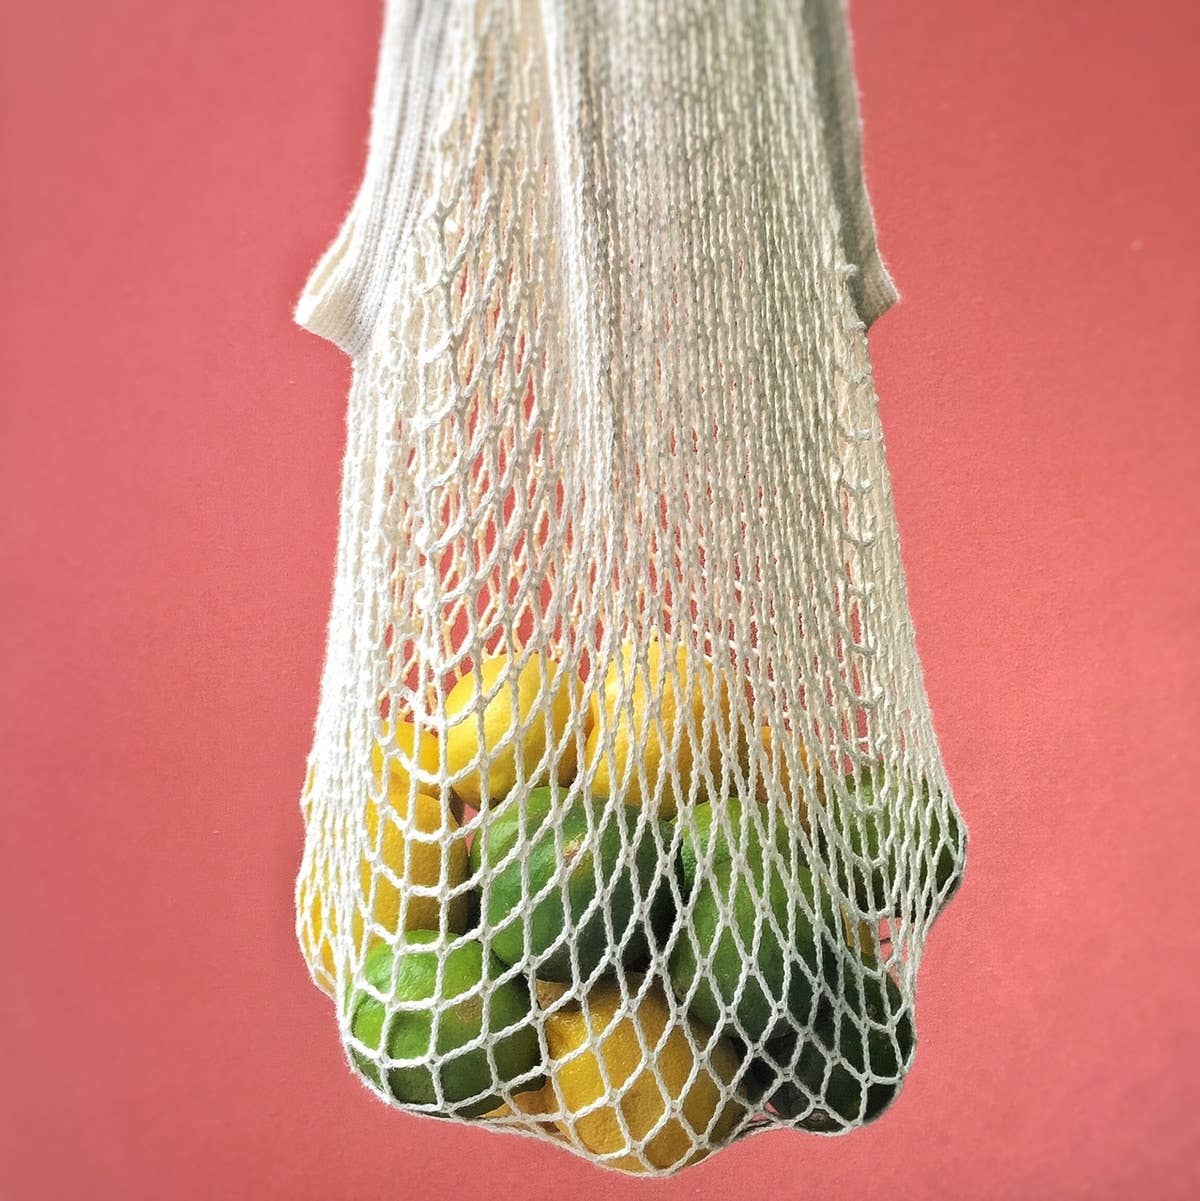 French Market Tote - Farmer's Market Cotton String Bag